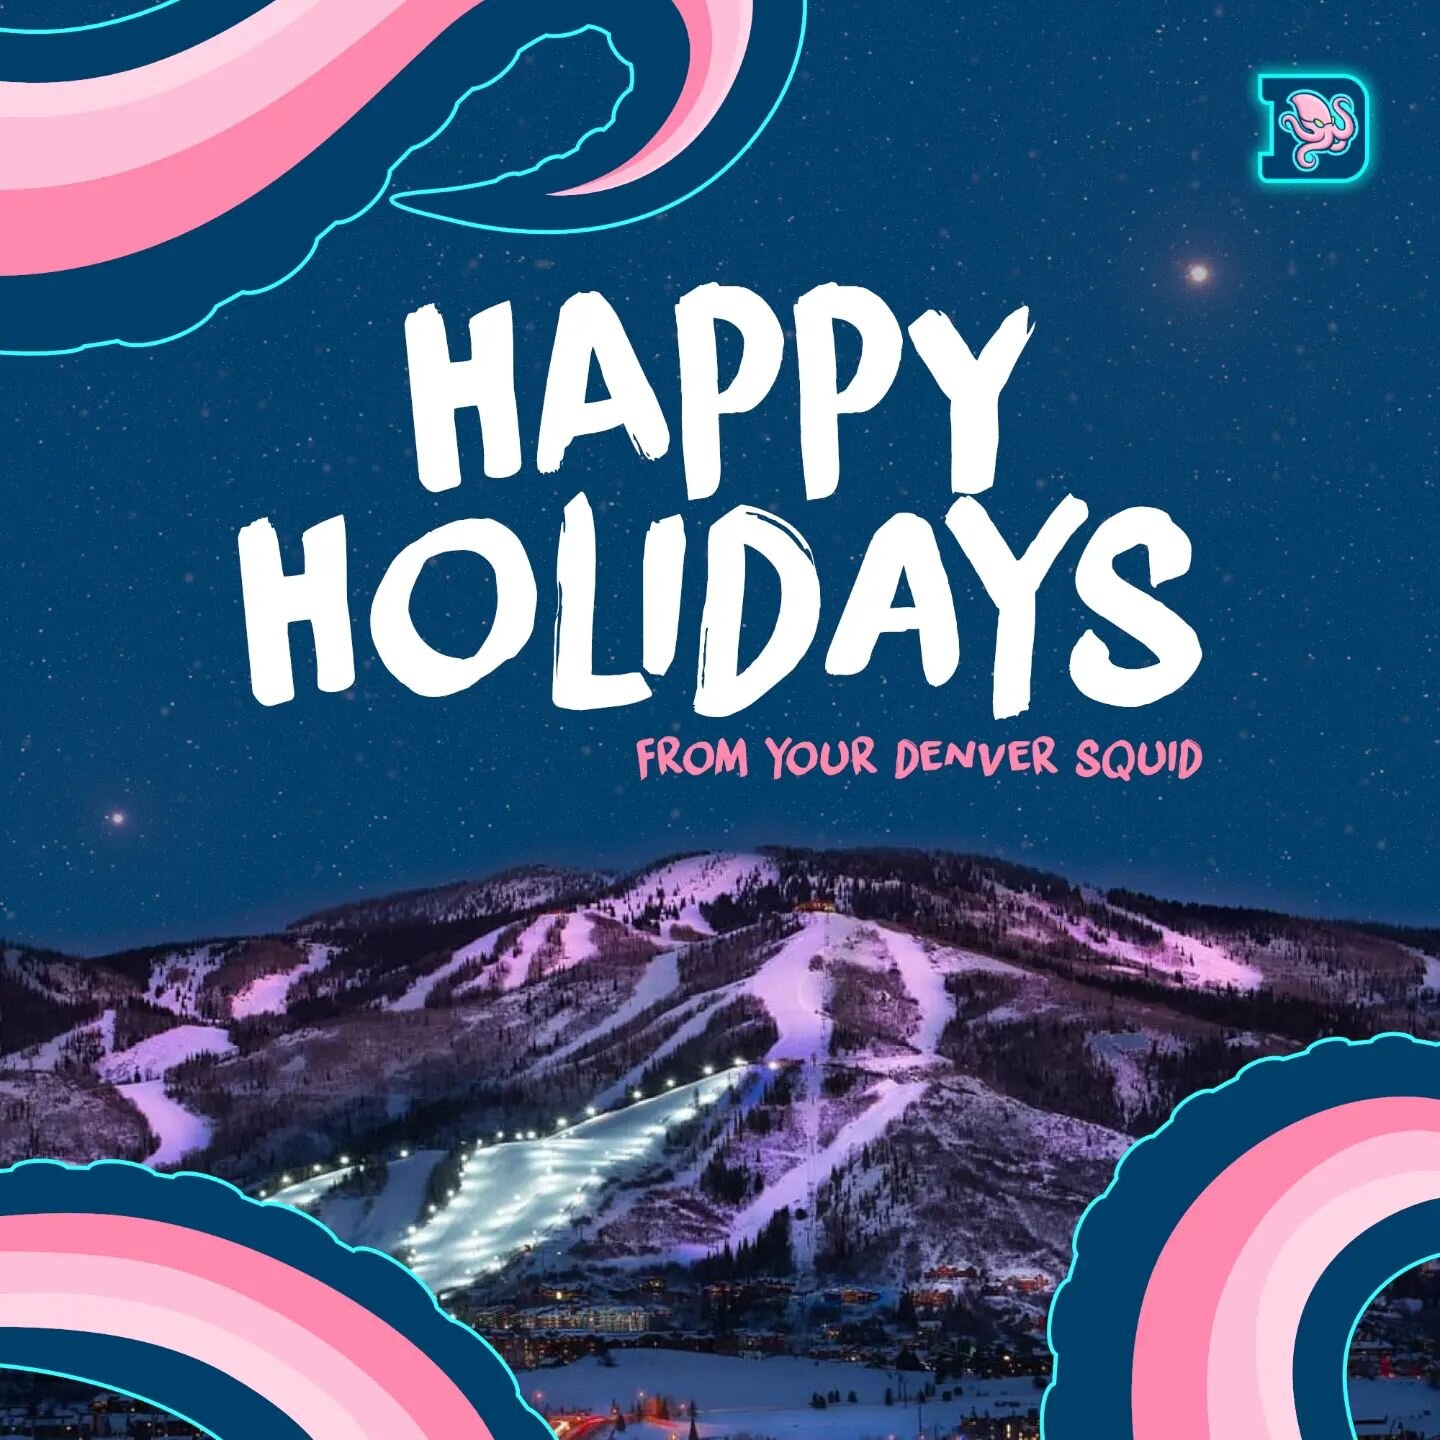 Happy Holidays Everyone! Thanks to a wonderful 2022 Denver Squid - Aquatics Club. We look forward to 2023!
_
@igla.1987 #igla #inclusivesports #lgbt #gay #lesbian #trans #inclusion #diversity #happyholidays #newyears #queer #gaysports #swimming #wate